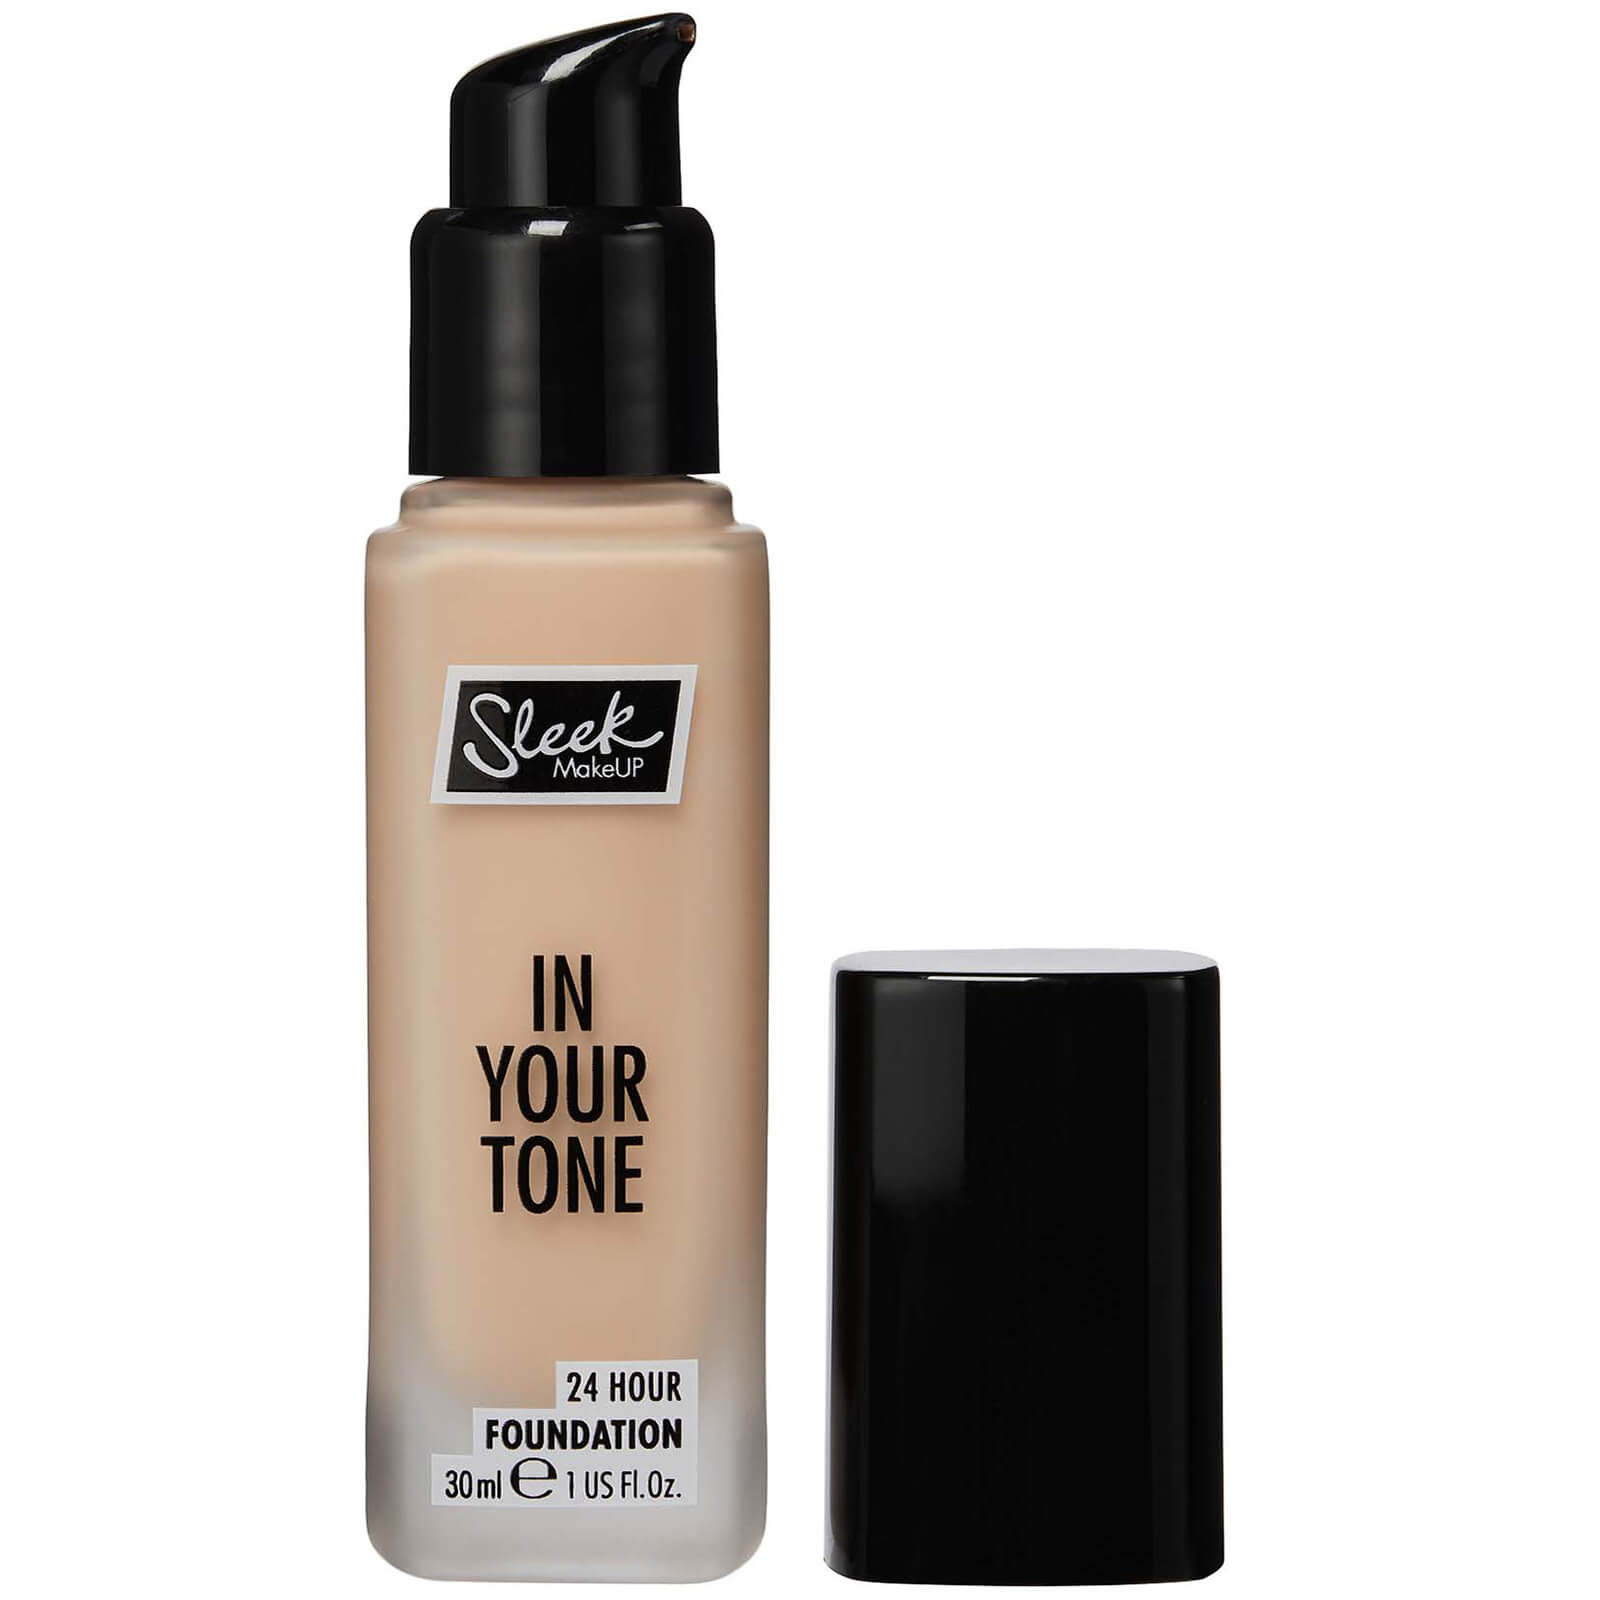 Sleek MakeUP in Your Tone 24 Hour Foundation 30ml (Various Shades) - 3N von Sleek MakeUP